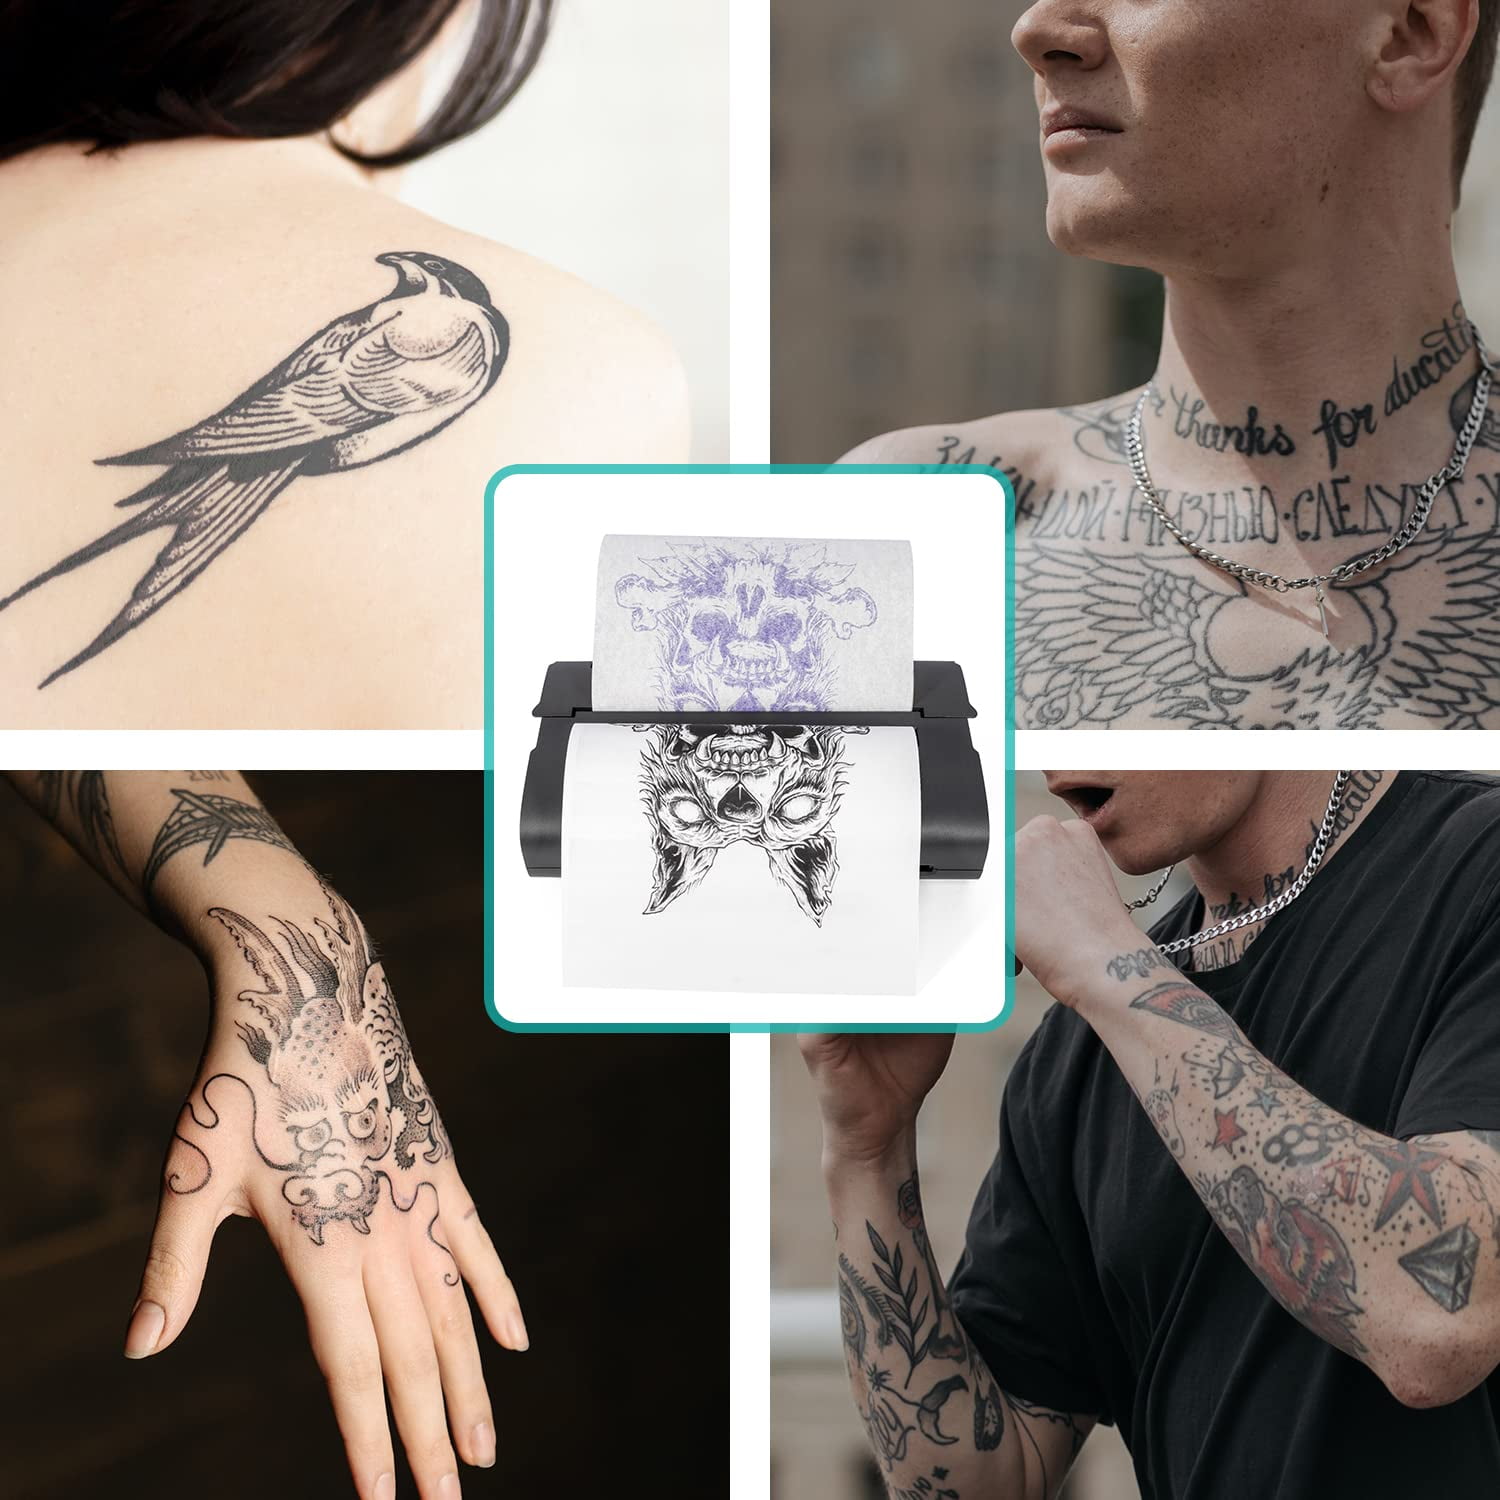 LifeBasis Tattoo Stencil Maker Transfer Machine Thermal Copier With Free  Stencil Paper